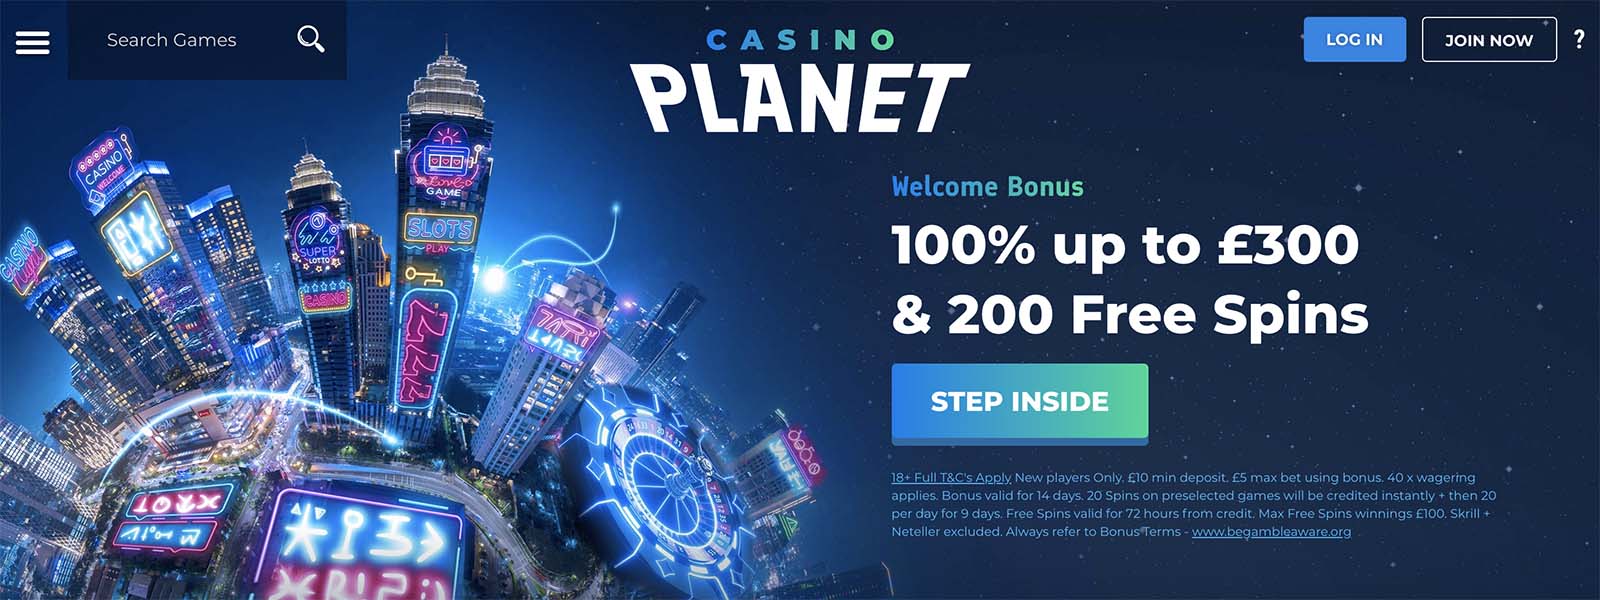 Homepage of Casino Planet